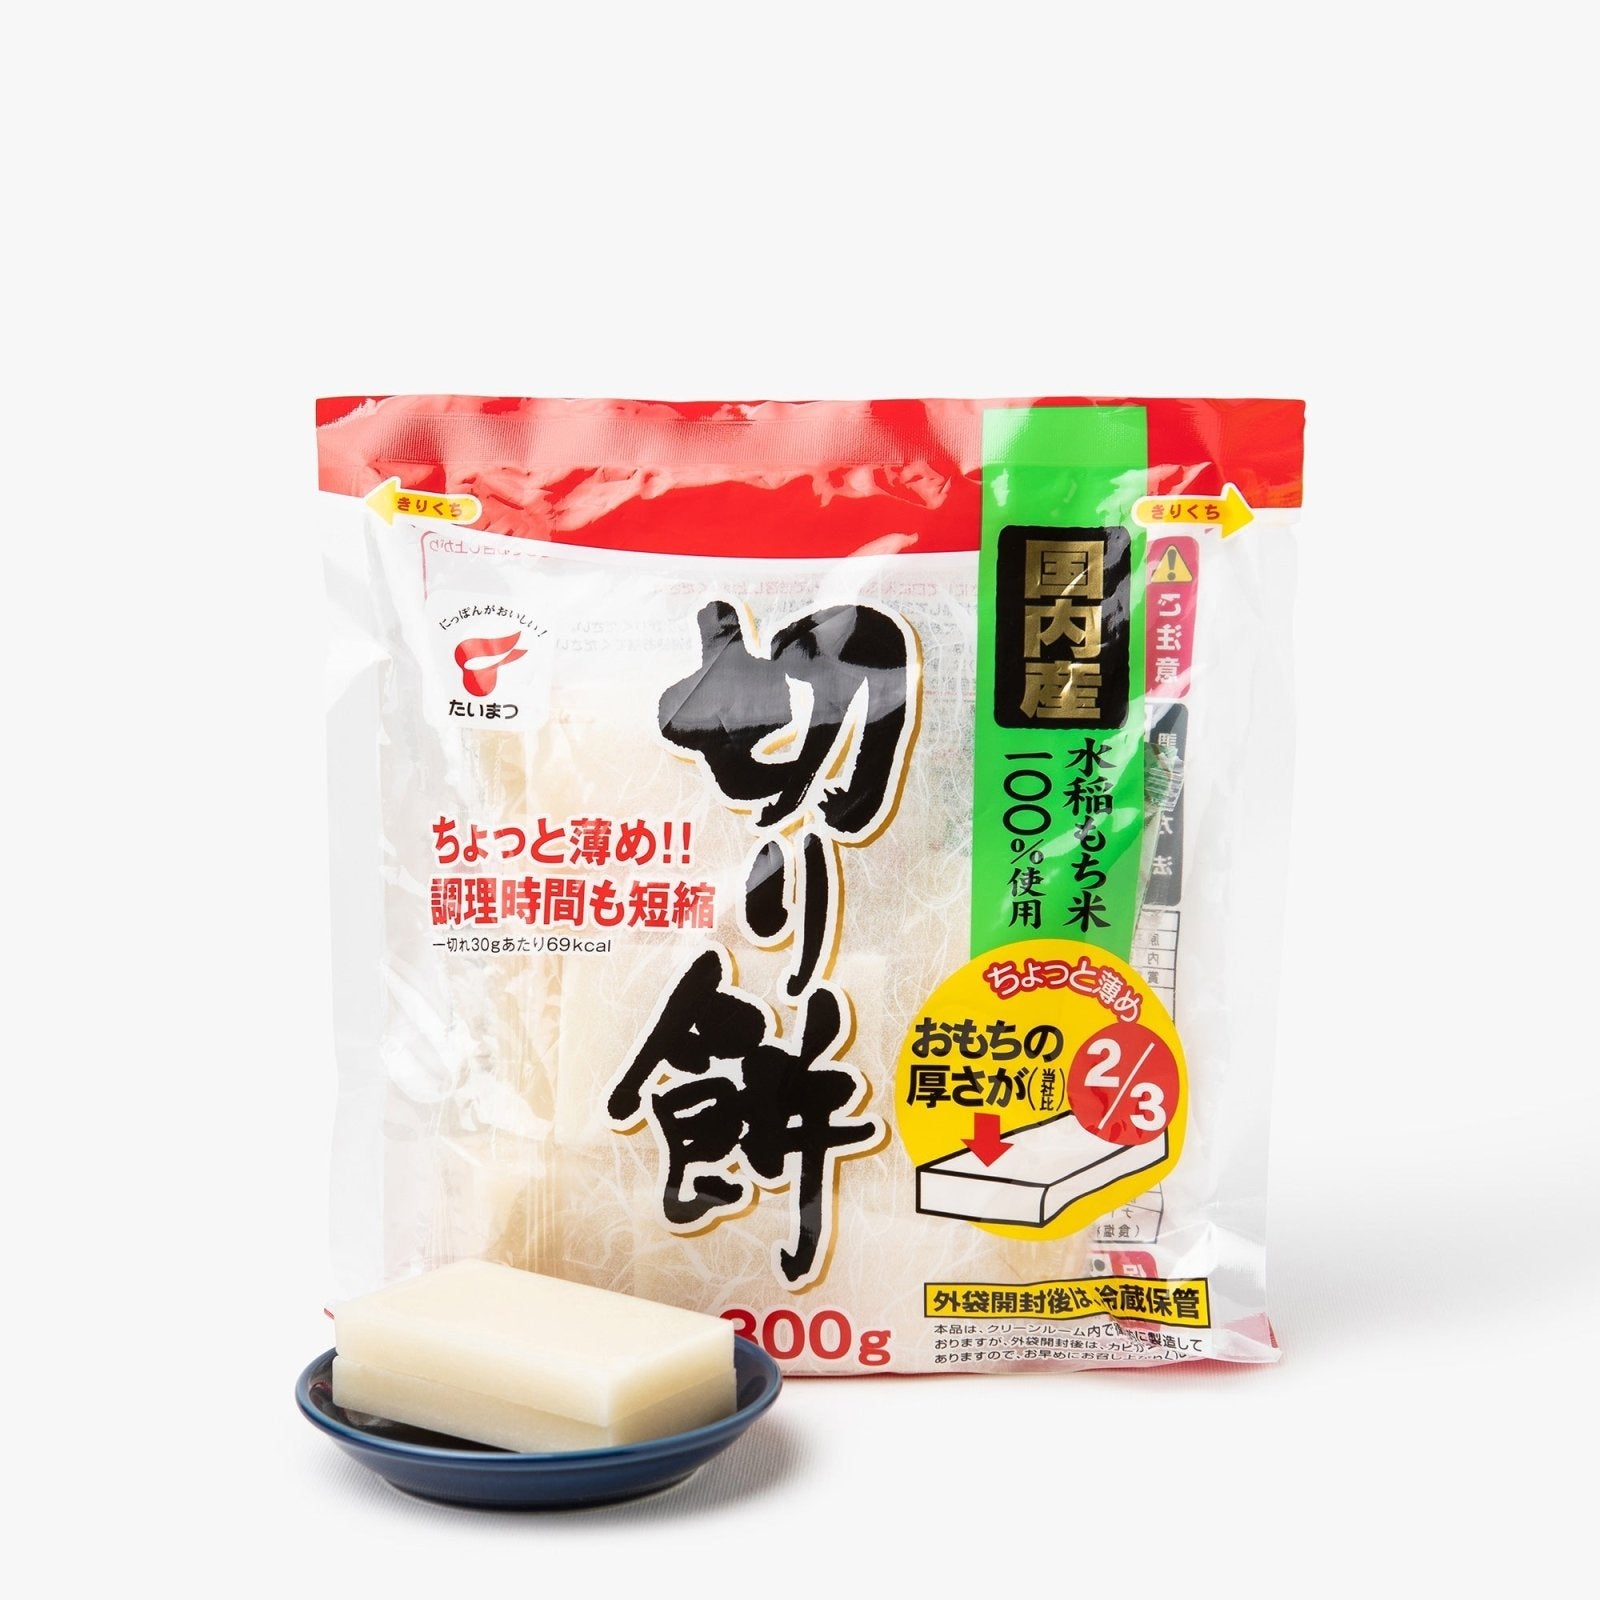 Mochi fin à cuisiner - 300g - Taimatsu Foods Corporation - iRASSHAi